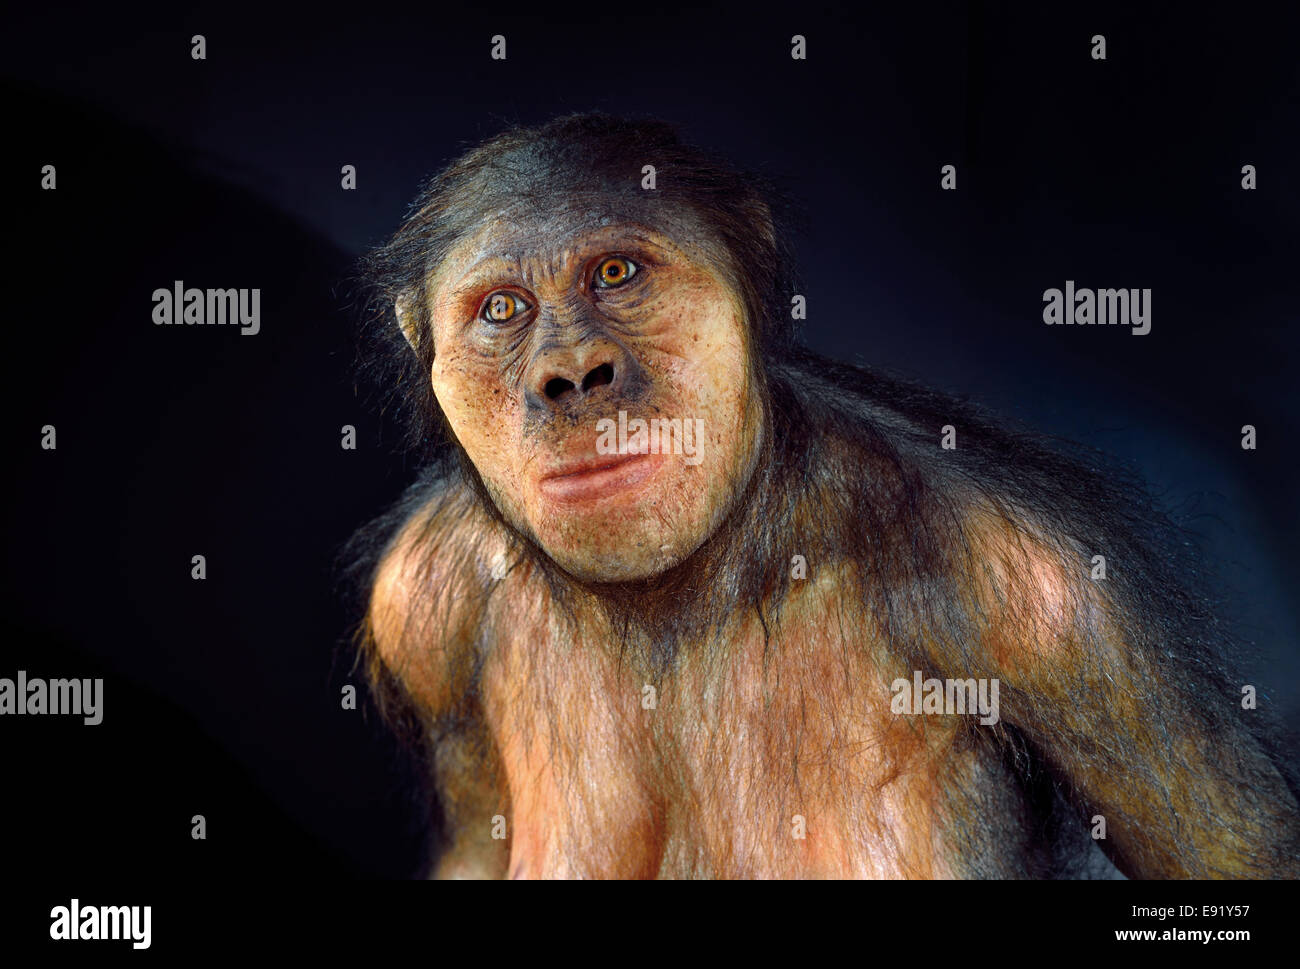 Spain, Burgos: Portrait of a hominid Australopithecus africanus in the Museum of Human Evolution in Burgos Stock Photo